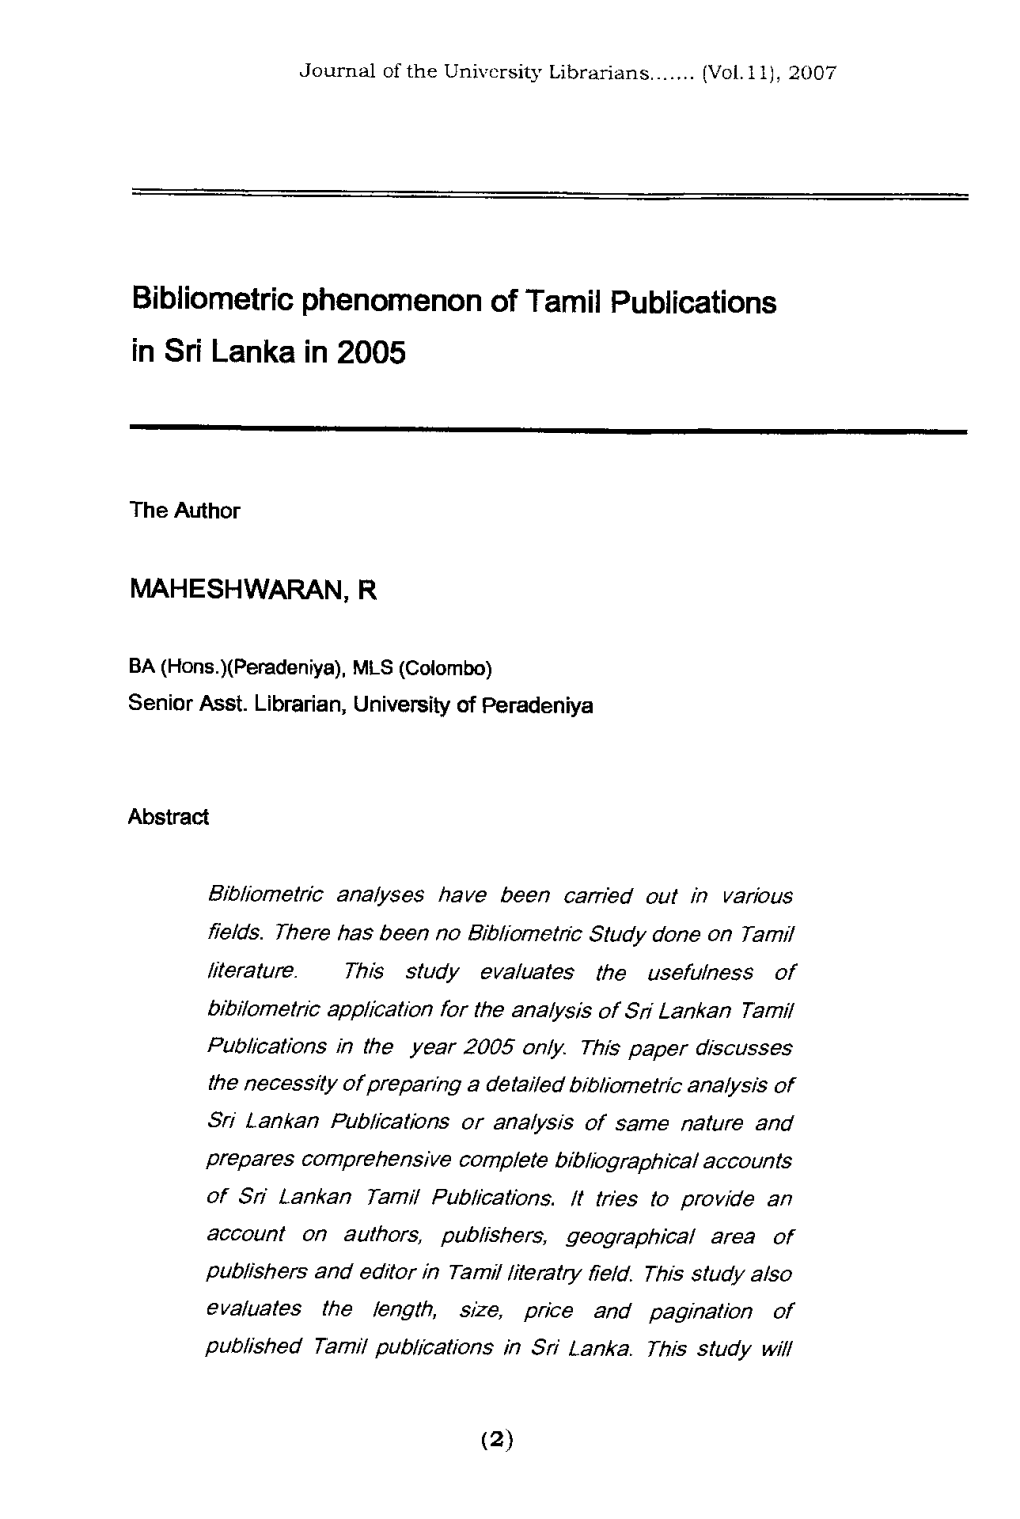 Bibliometric Phenomenon of Tamil Publications in Sri Lanka in 2005